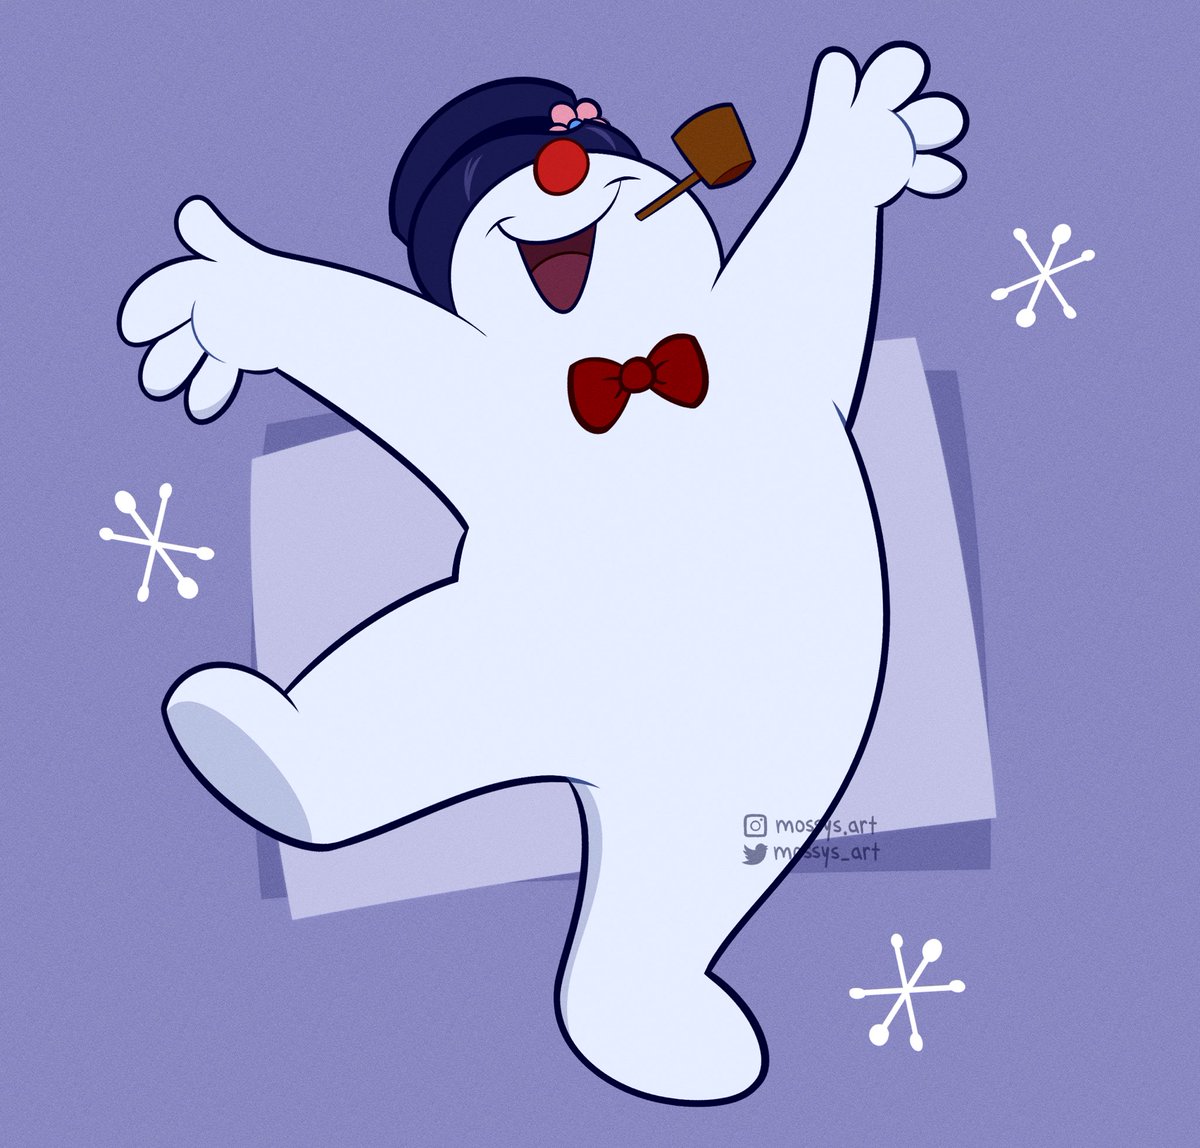 frosty the snowman! ☃️ #frostythesnowman #rankinbass